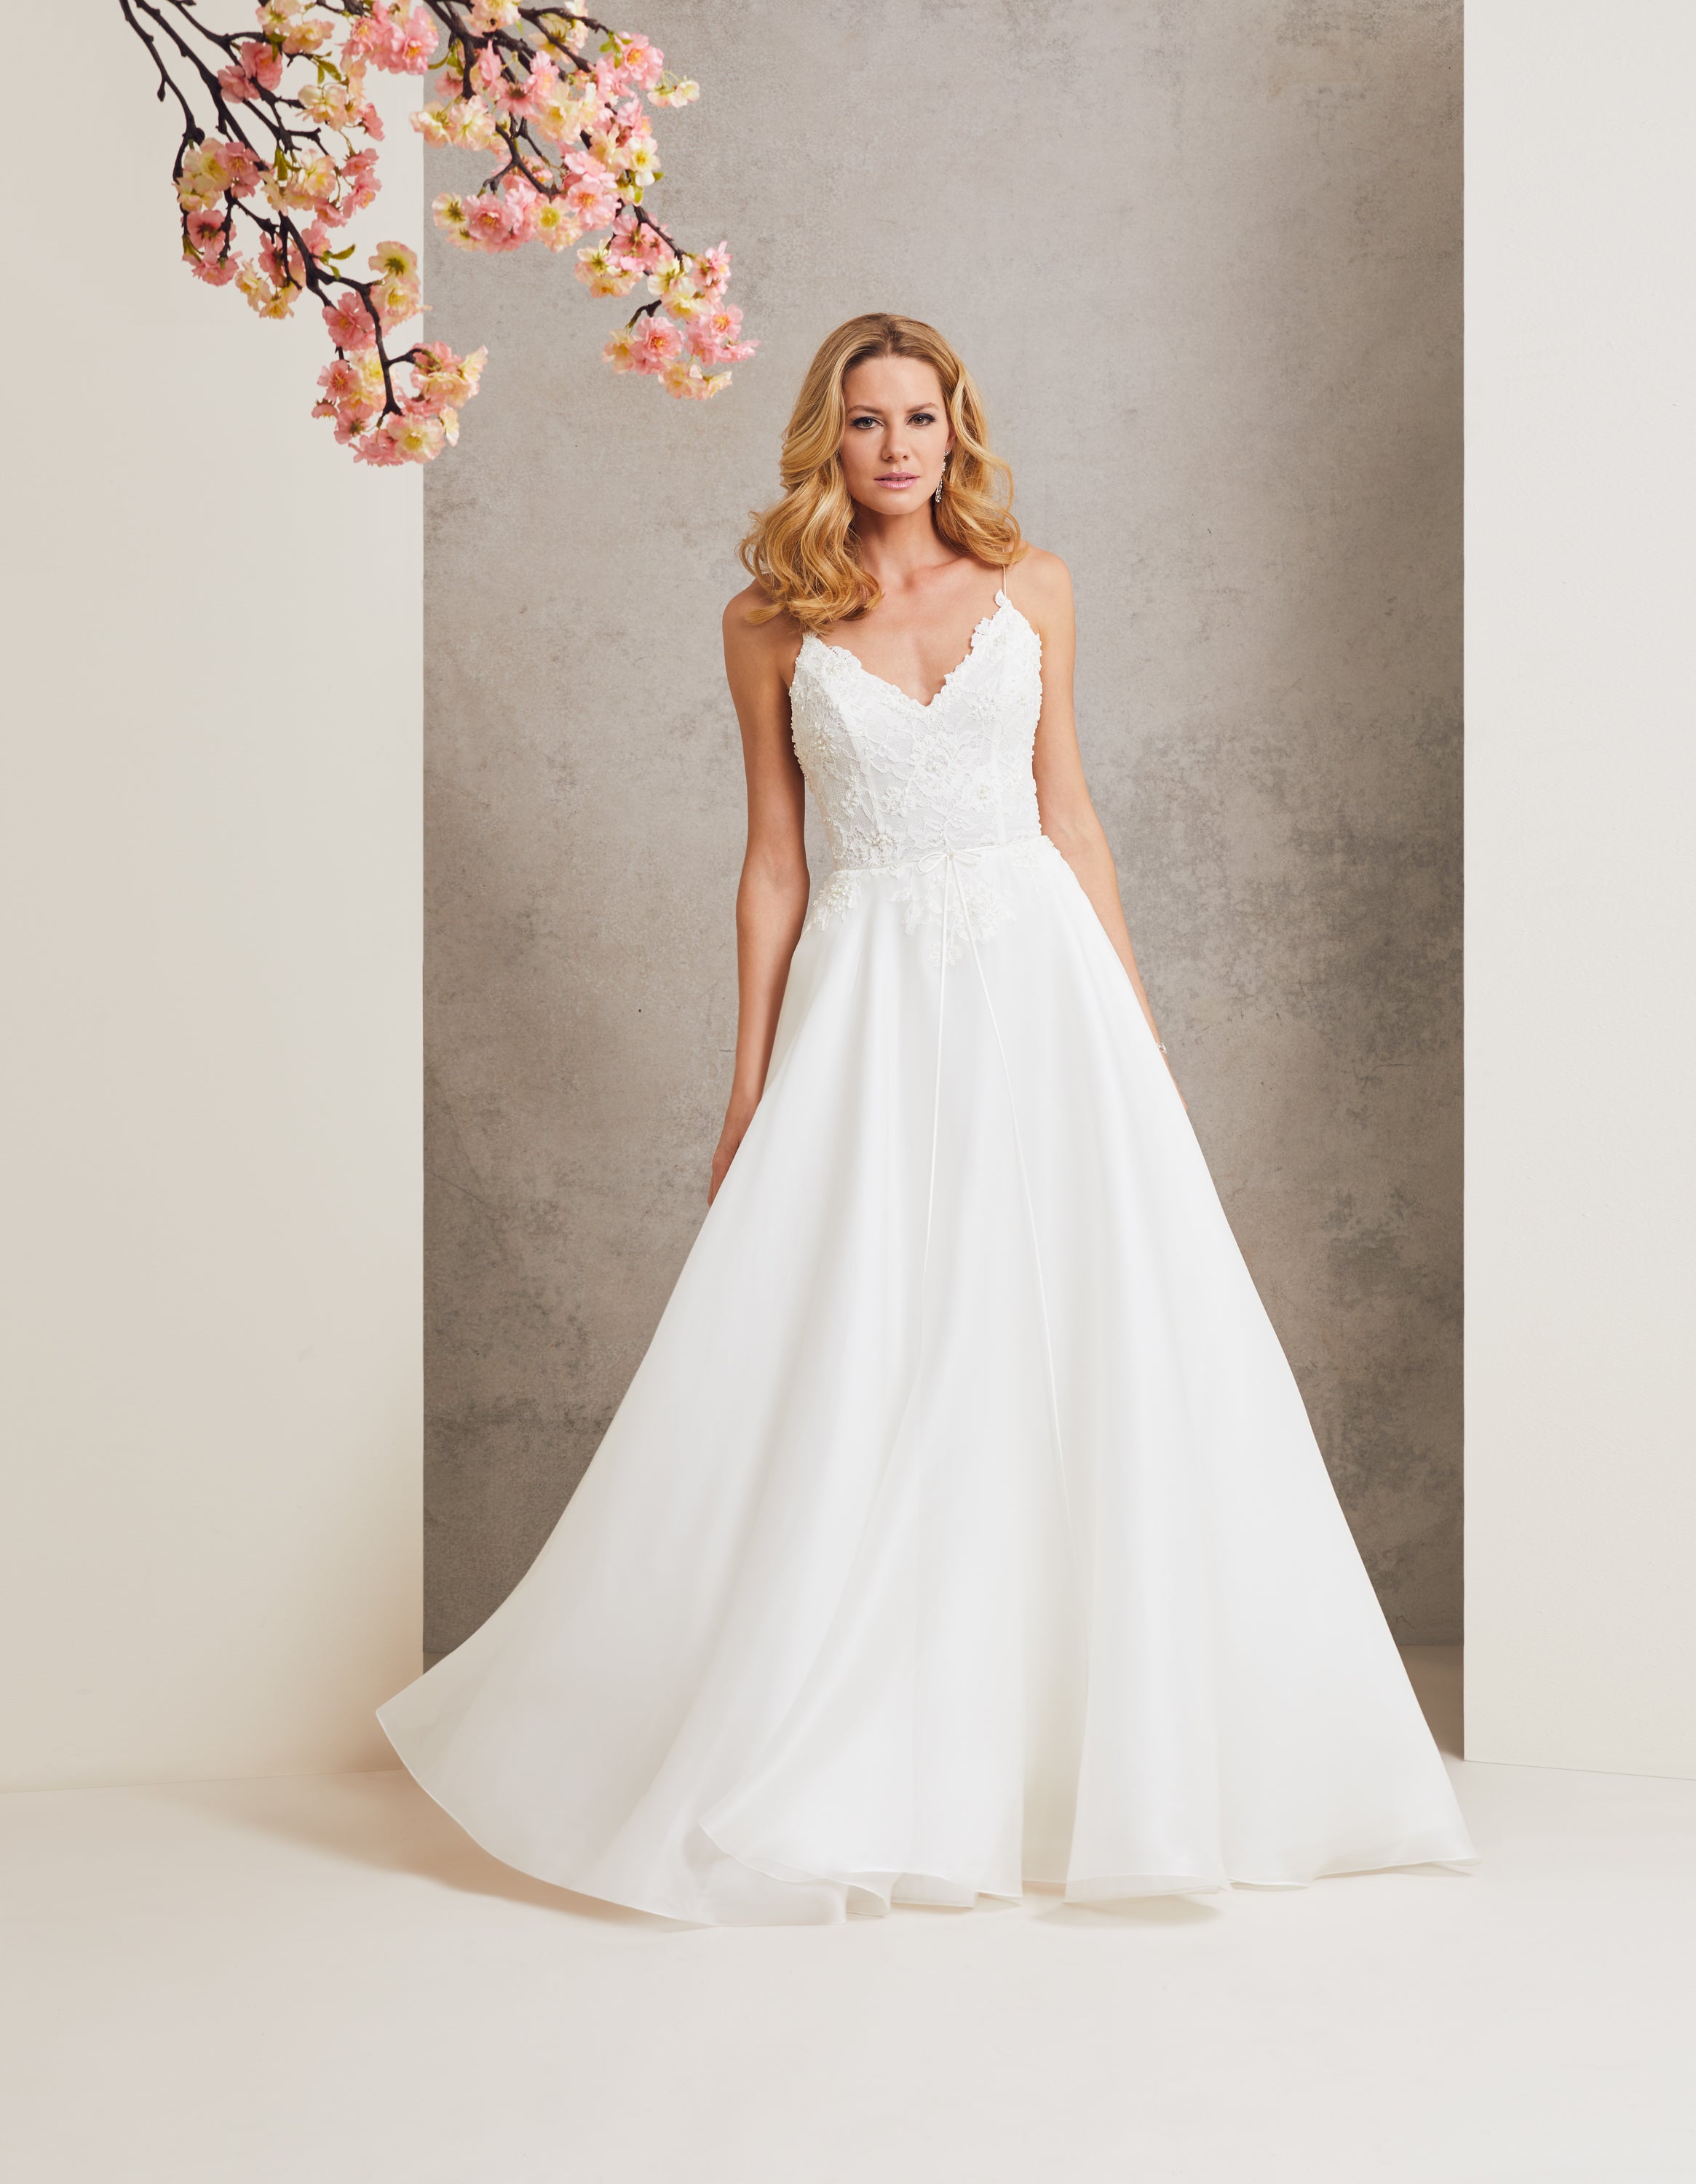 Four Seasons designer wedding dress by Caroline Castigliano